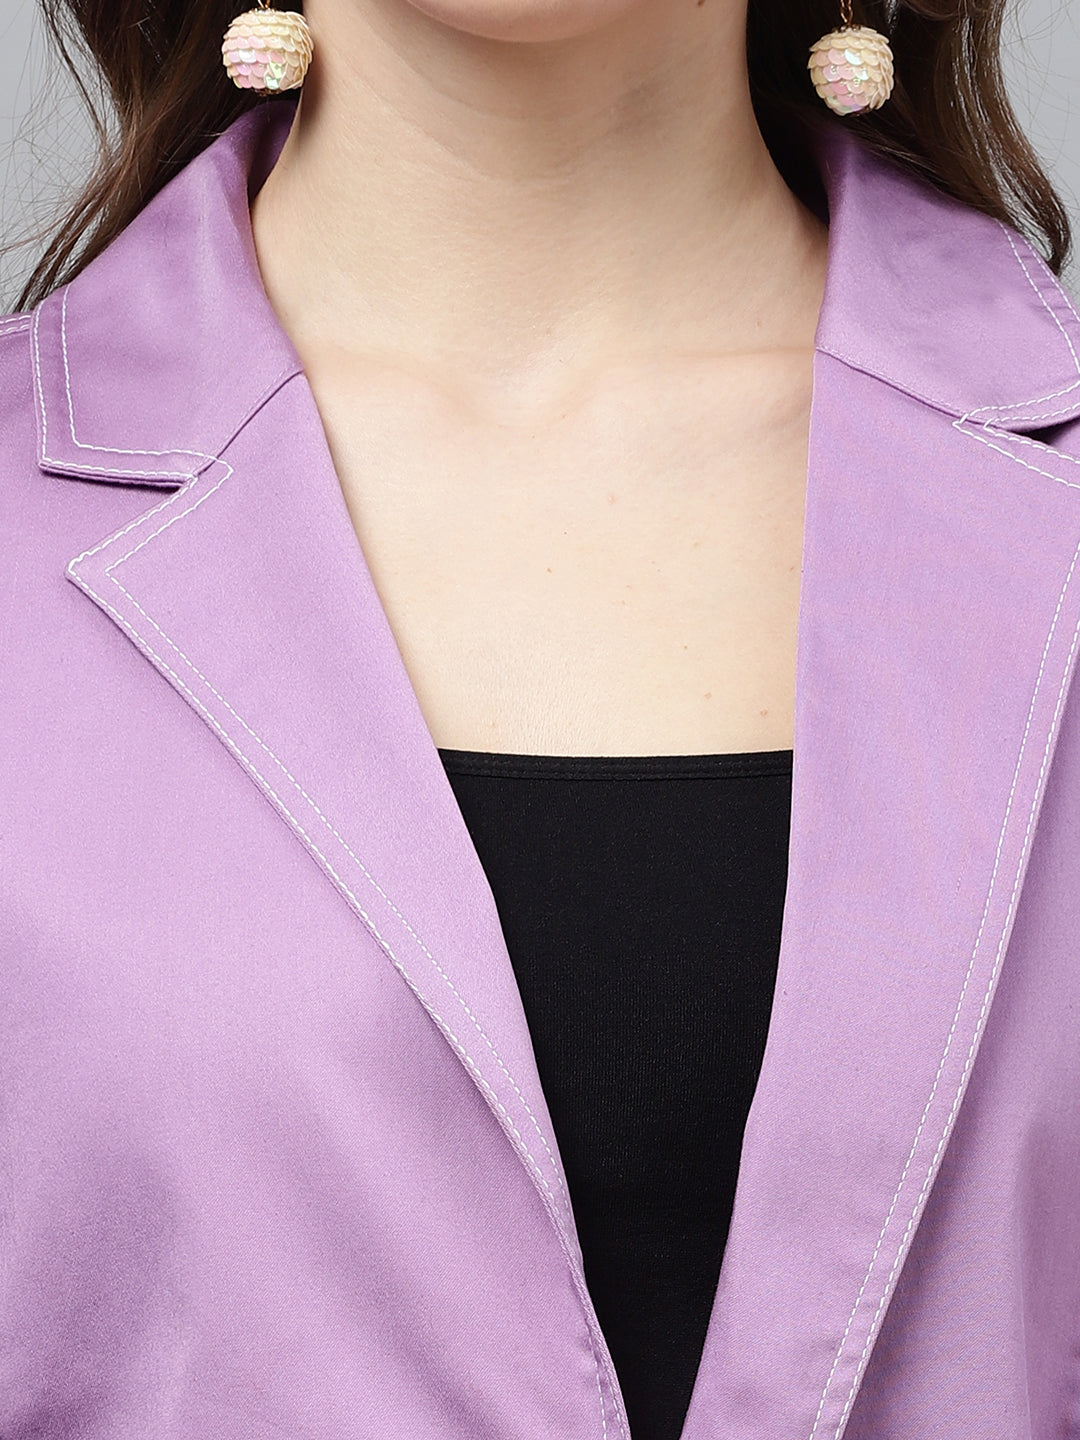 Athena Women Lavender Solid Denim Overcoat - Athena Lifestyle